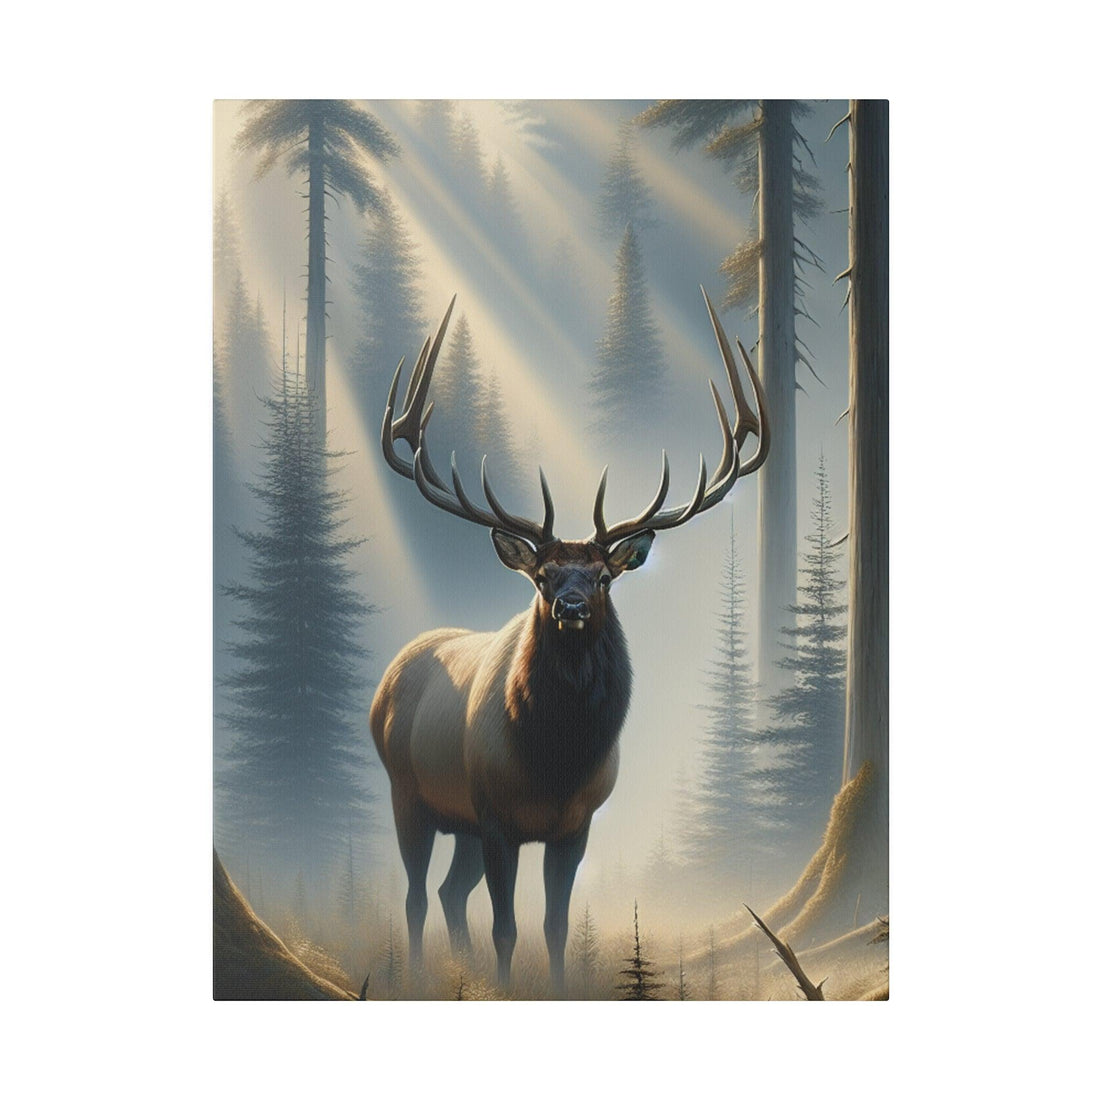 "Elk Elegance: Majestic Wilderness Canvas Wall Art" - The Alice Gallery